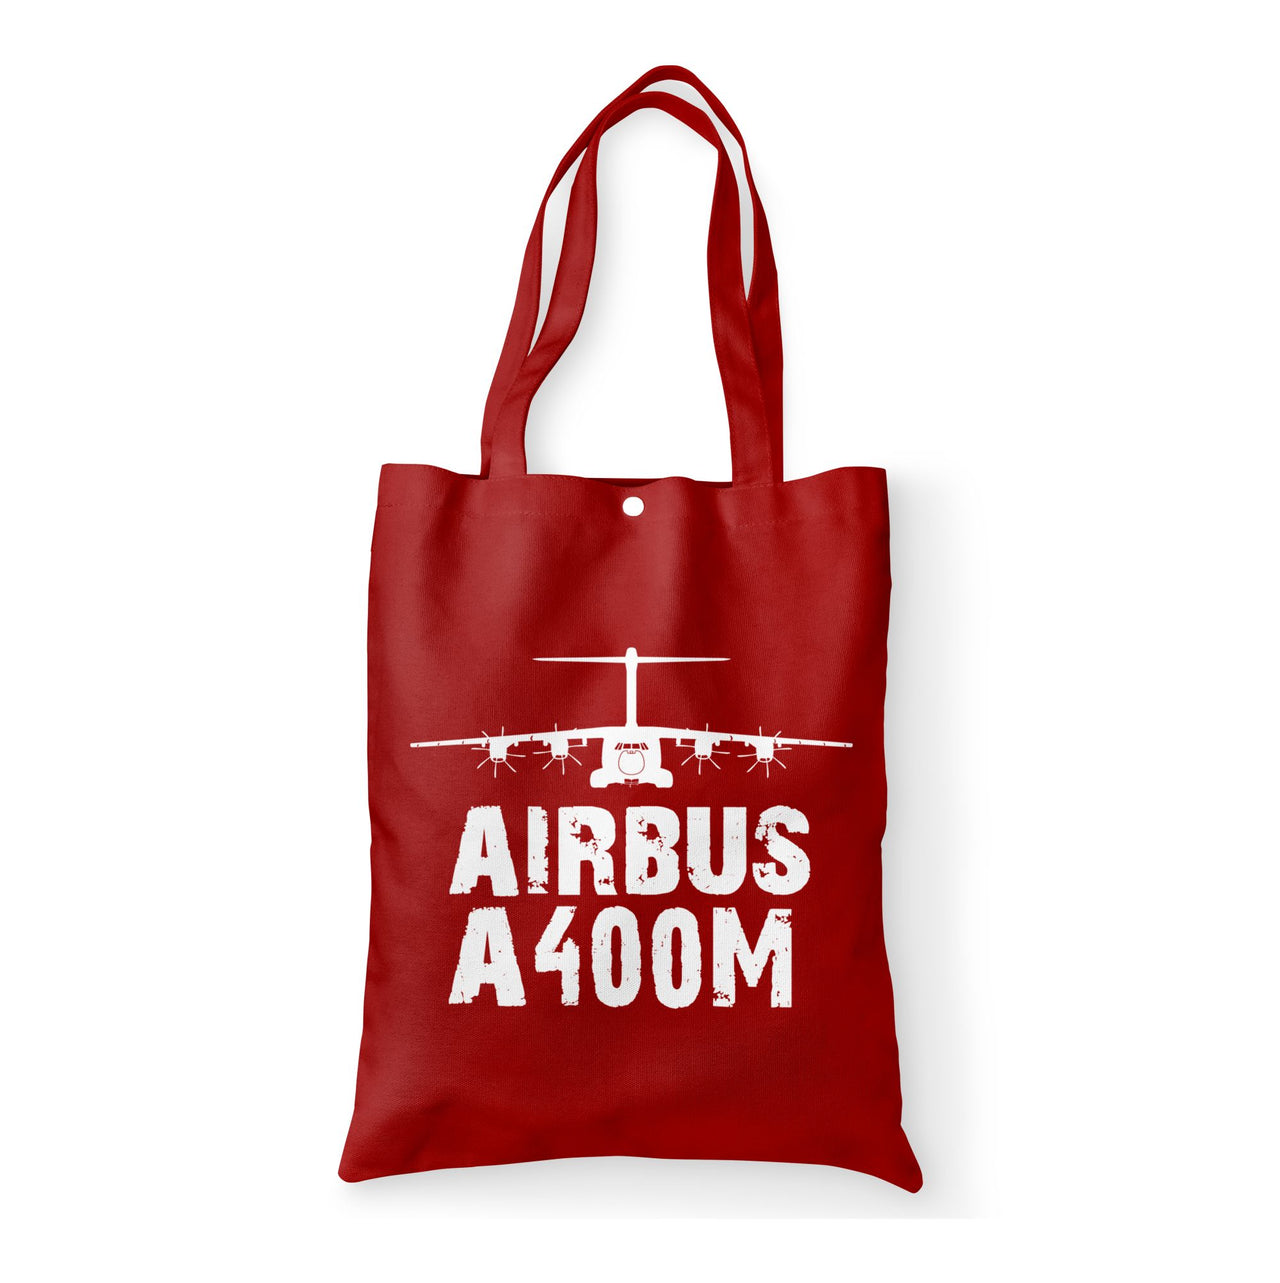 Airbus A400M & Plane Designed Tote Bags